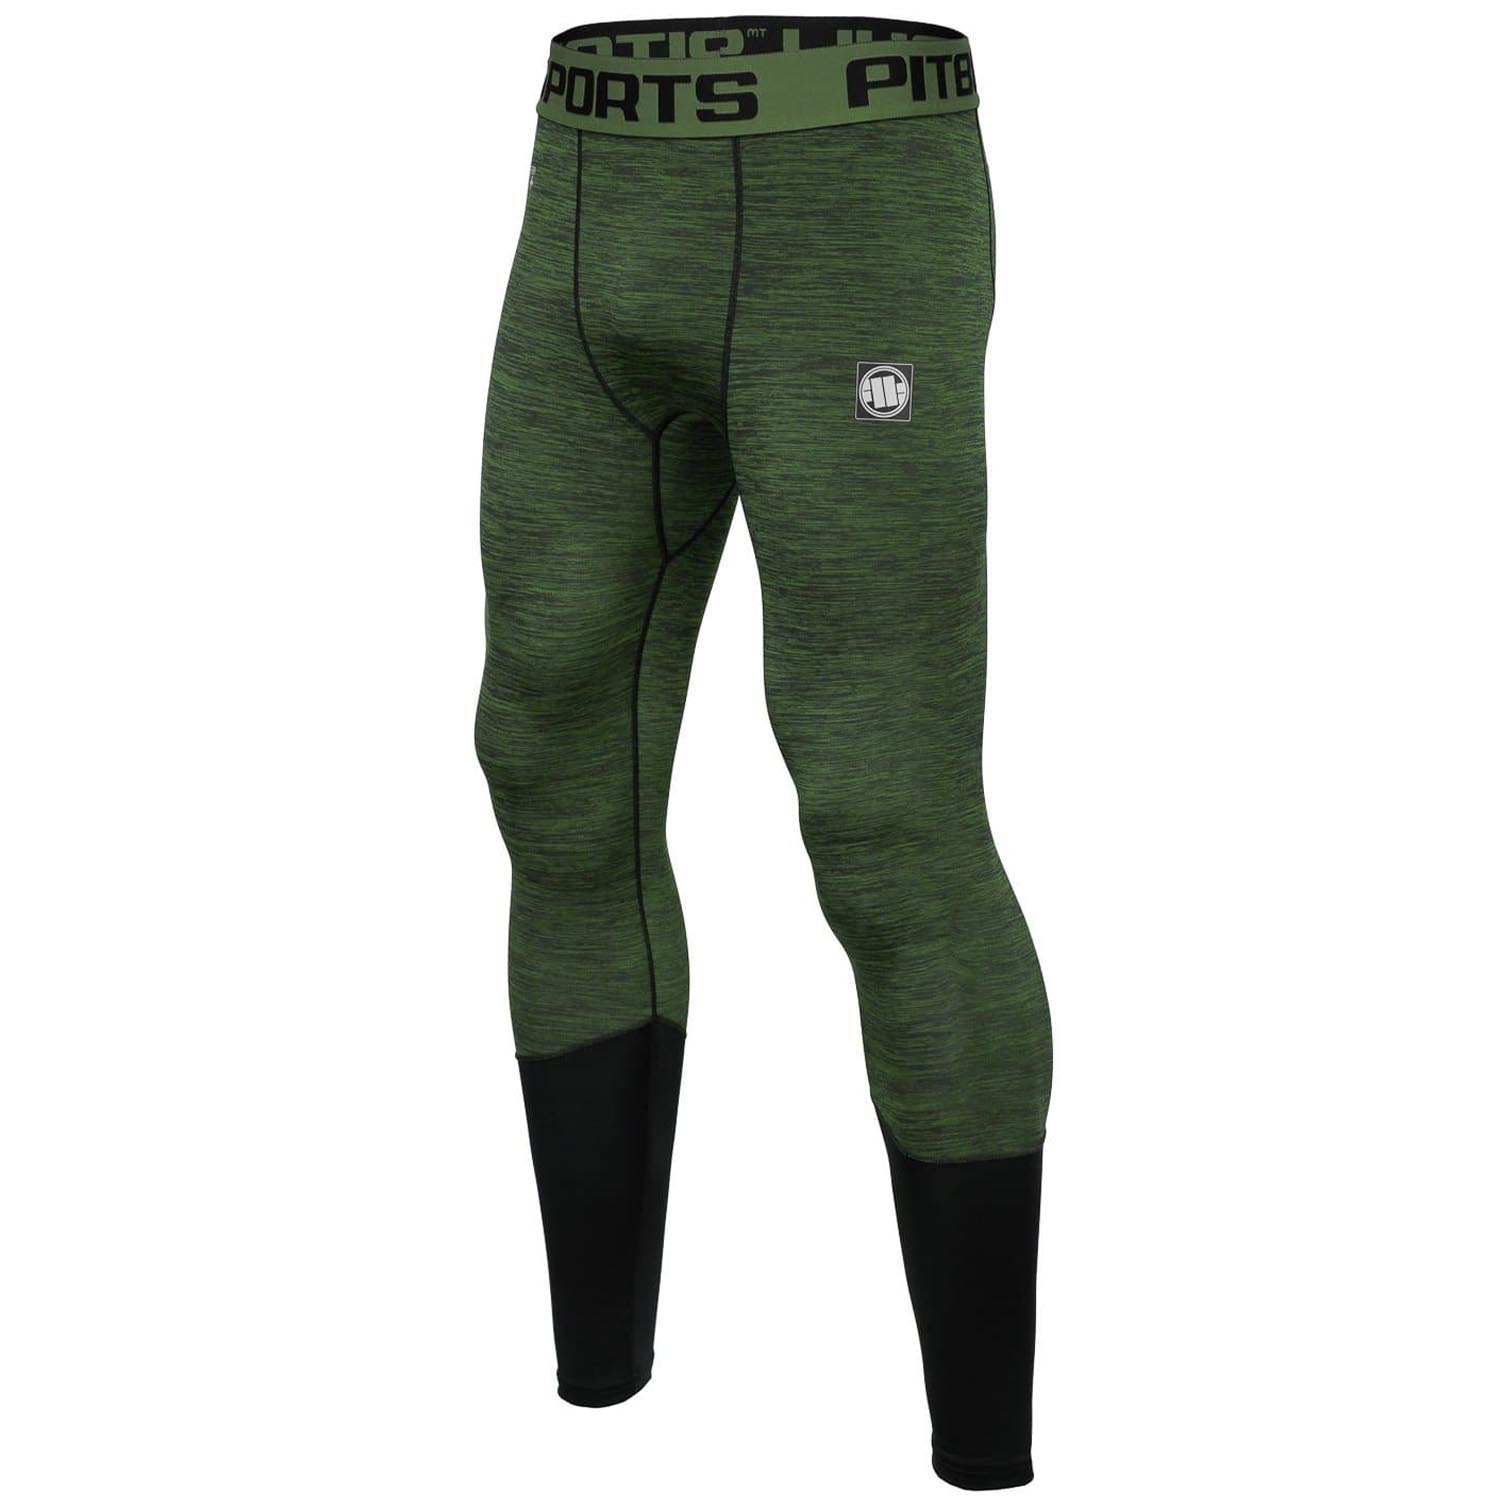 Pit Bull West Coast Compression Pants, Performance, Small Logo, dark green, S